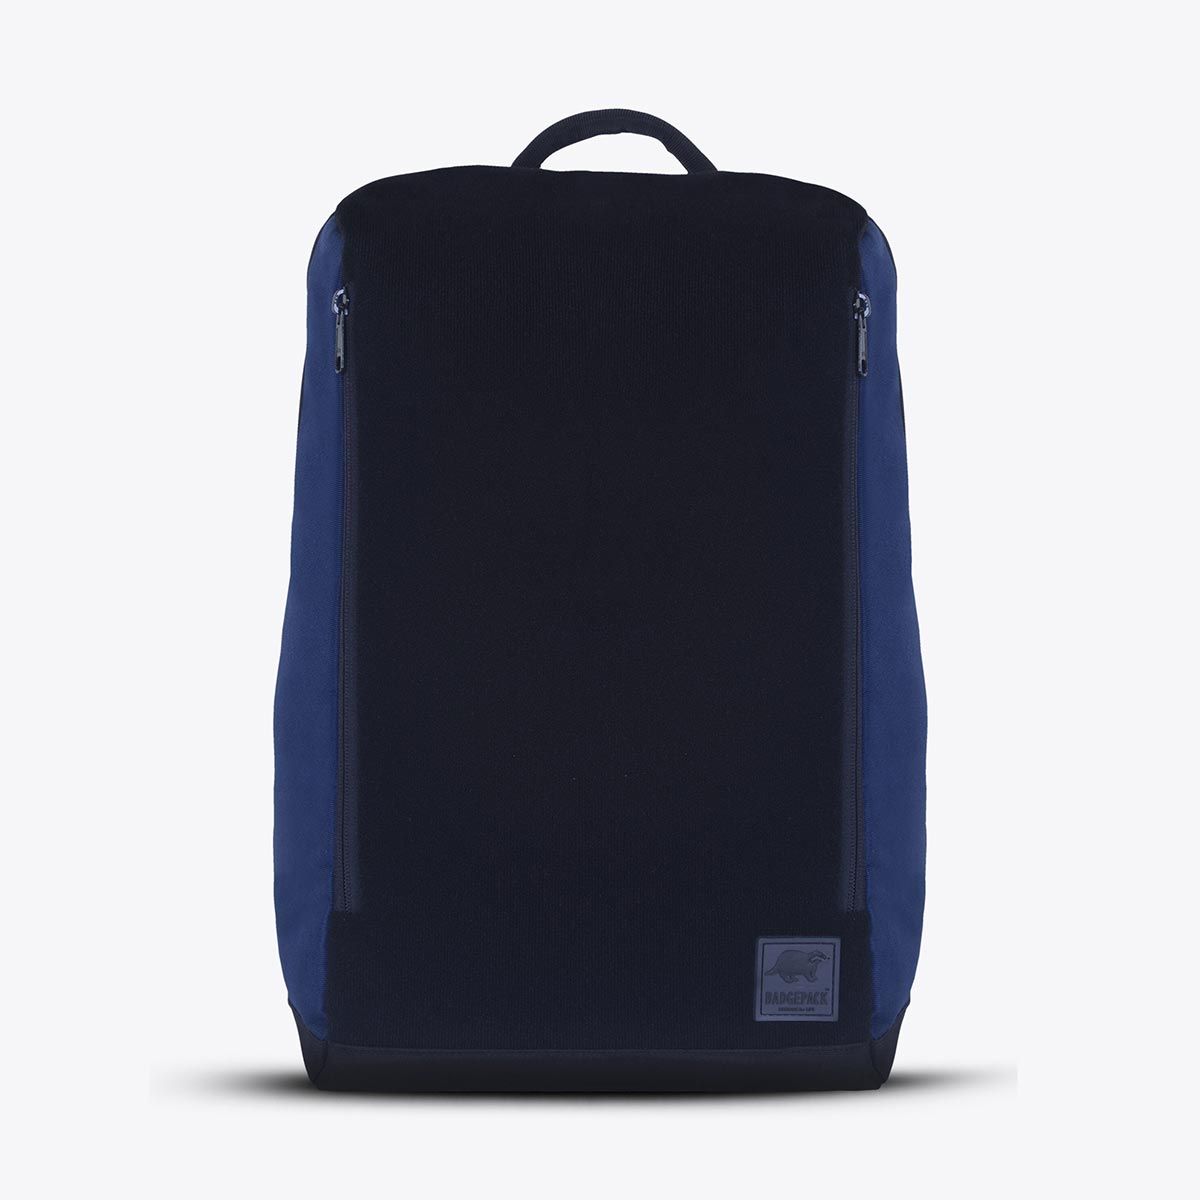 BadgePack Designs Hutton Backpack - Navy Blue Bag with 5 printed Badges